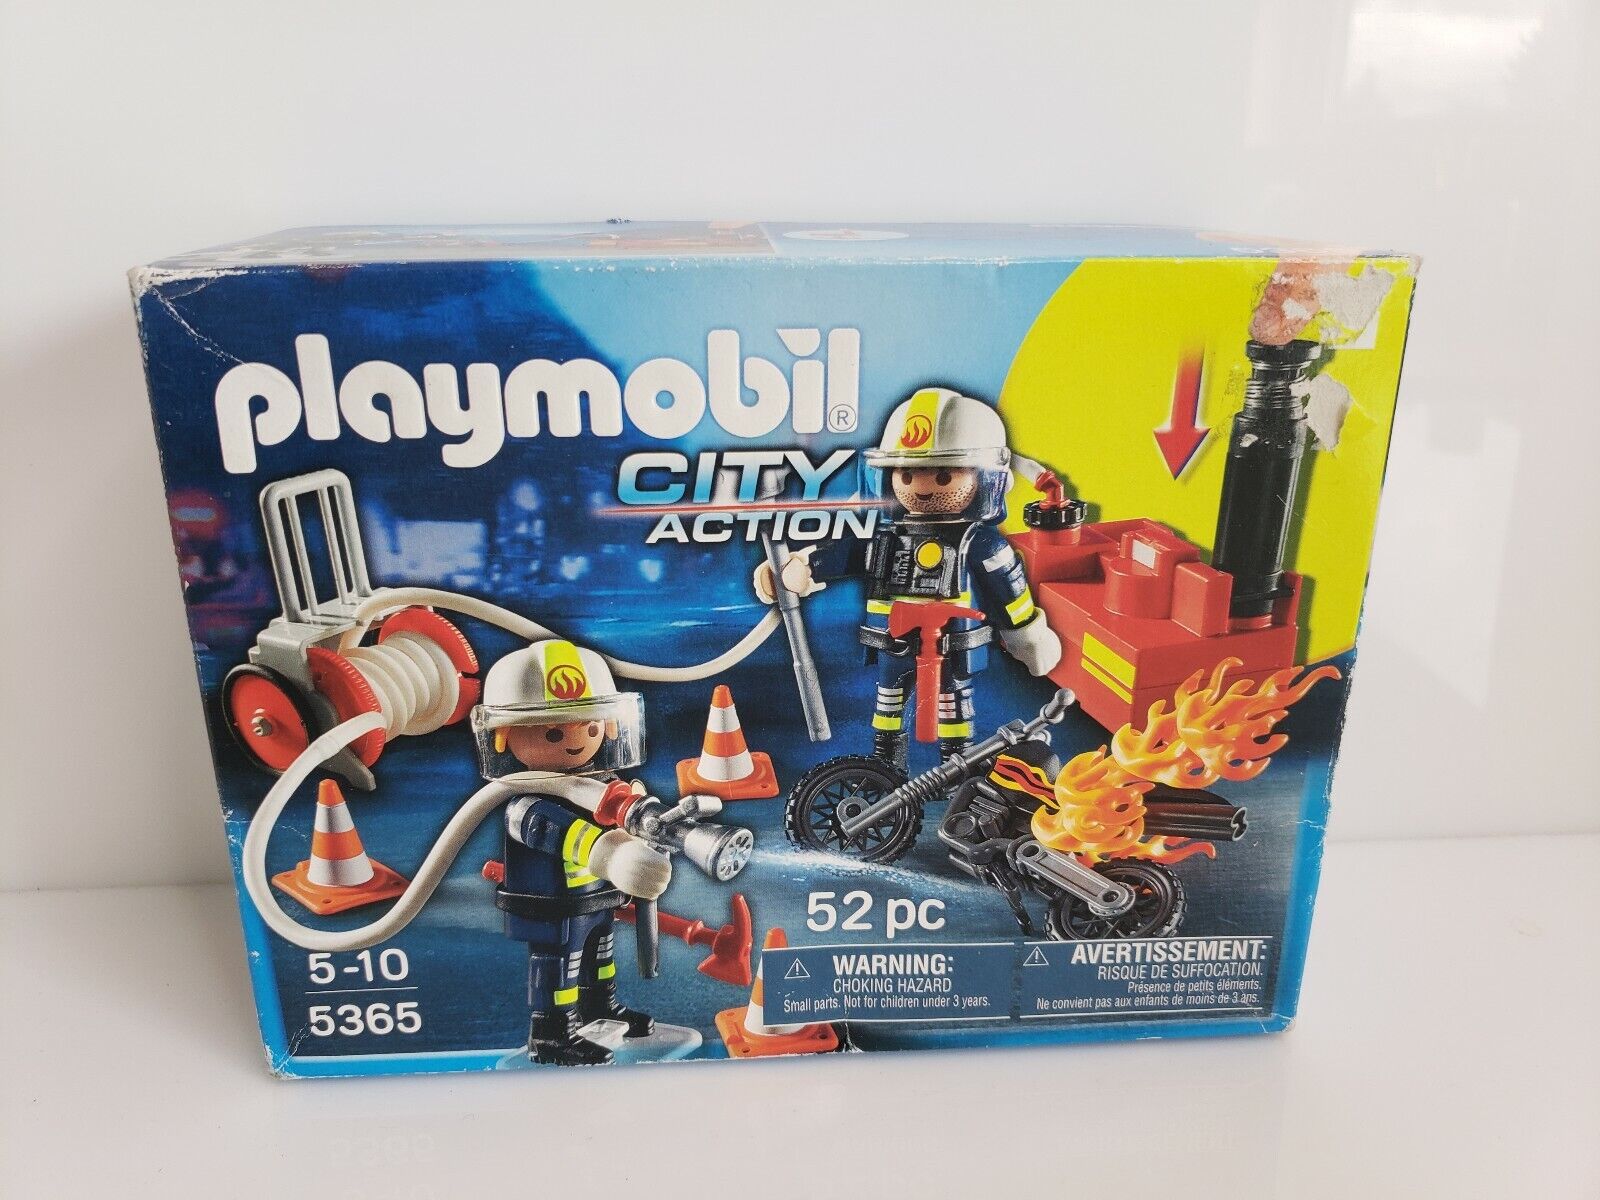 Playmobil City Action Fire Firefighters Set 5365 Germany 2013 eBay